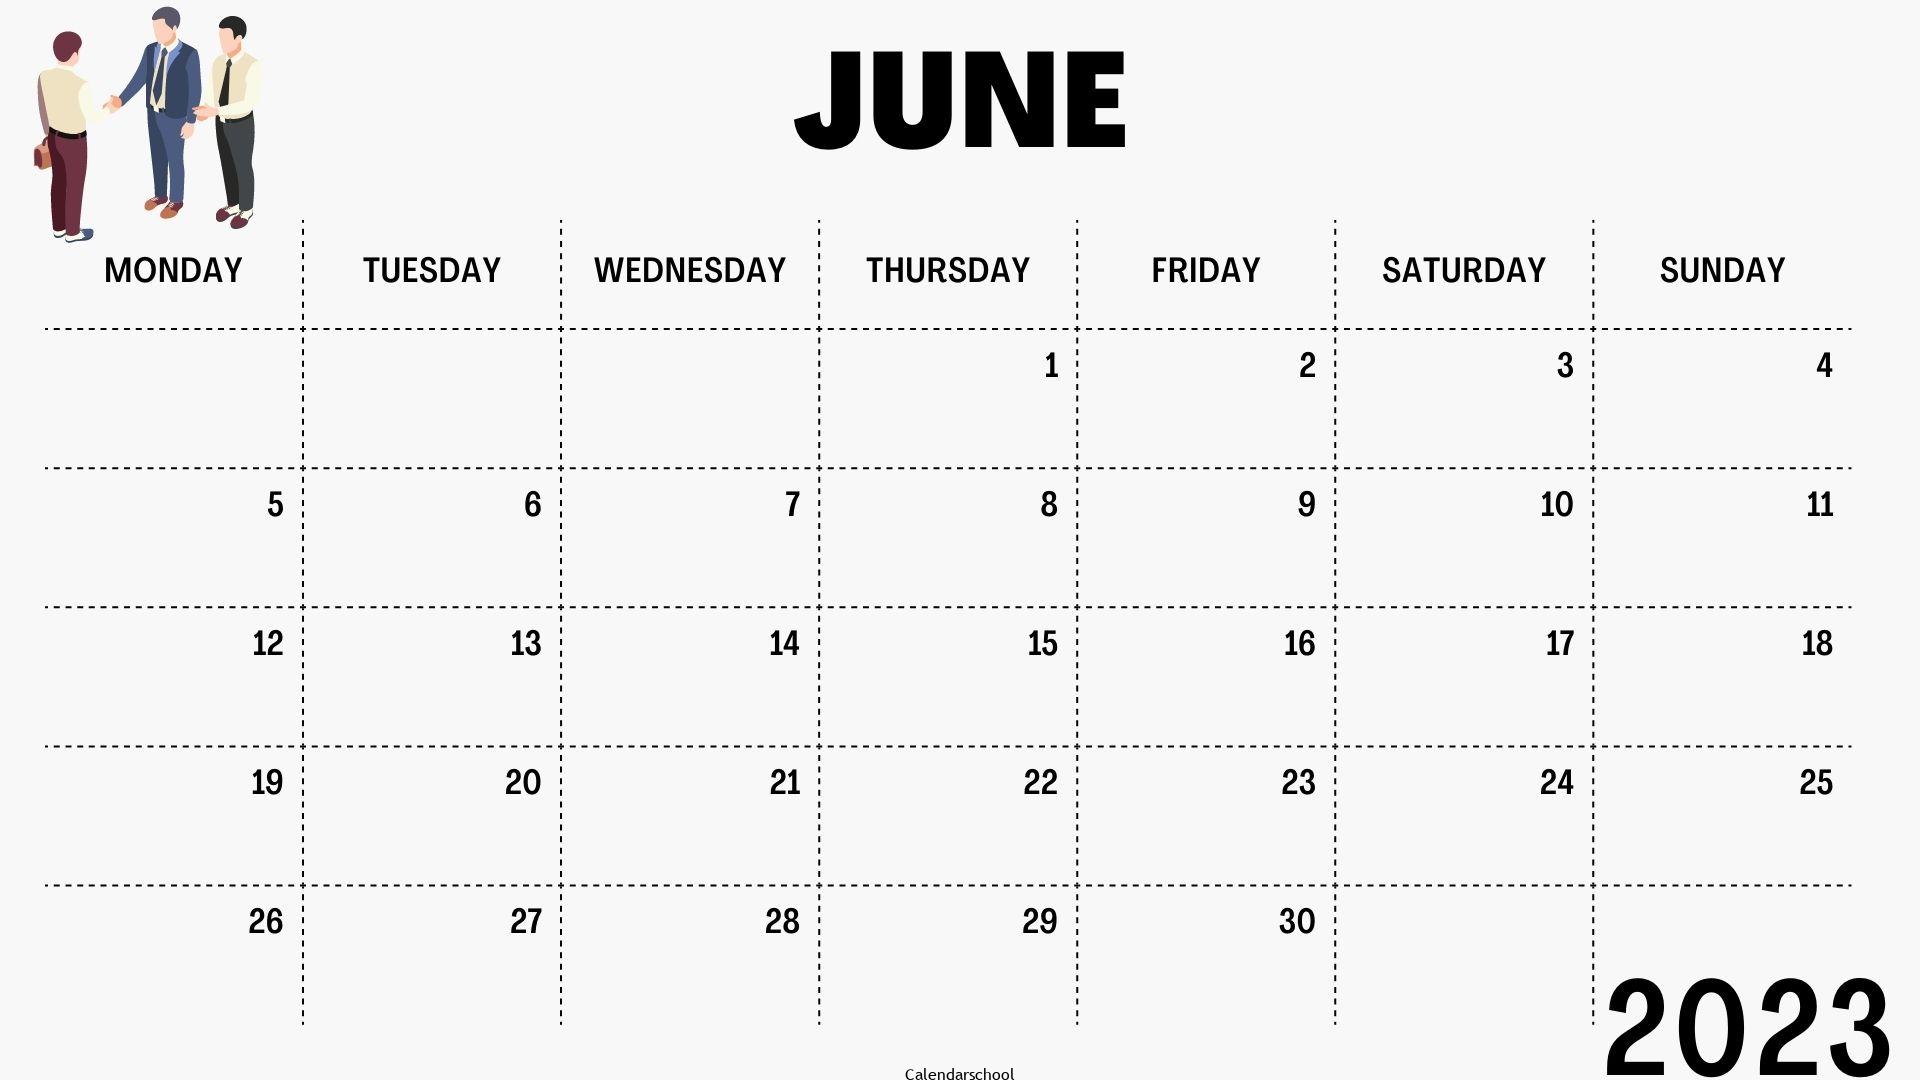 June 2023 Blank Calendar Image